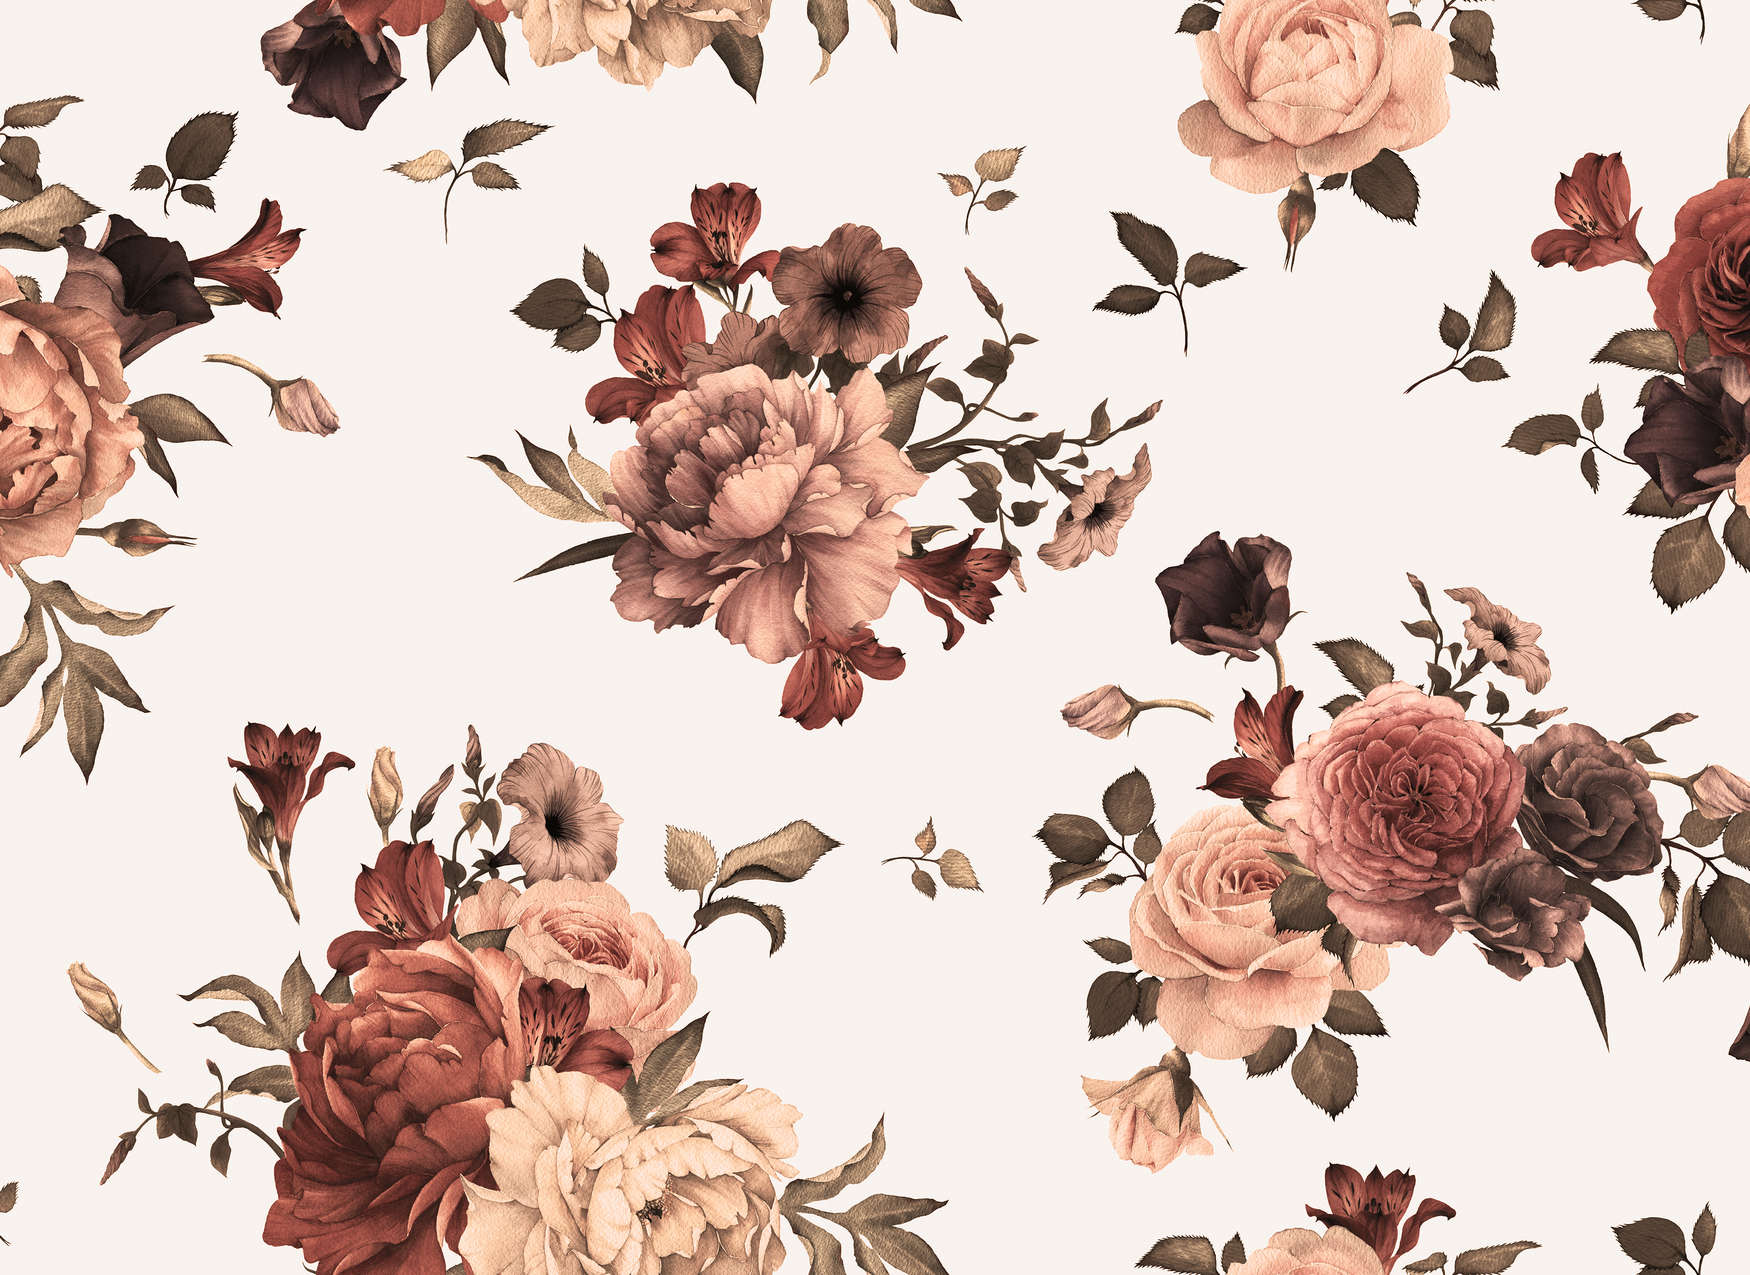             Papier peint fleuri design romantique - rose, blanc, marron
        